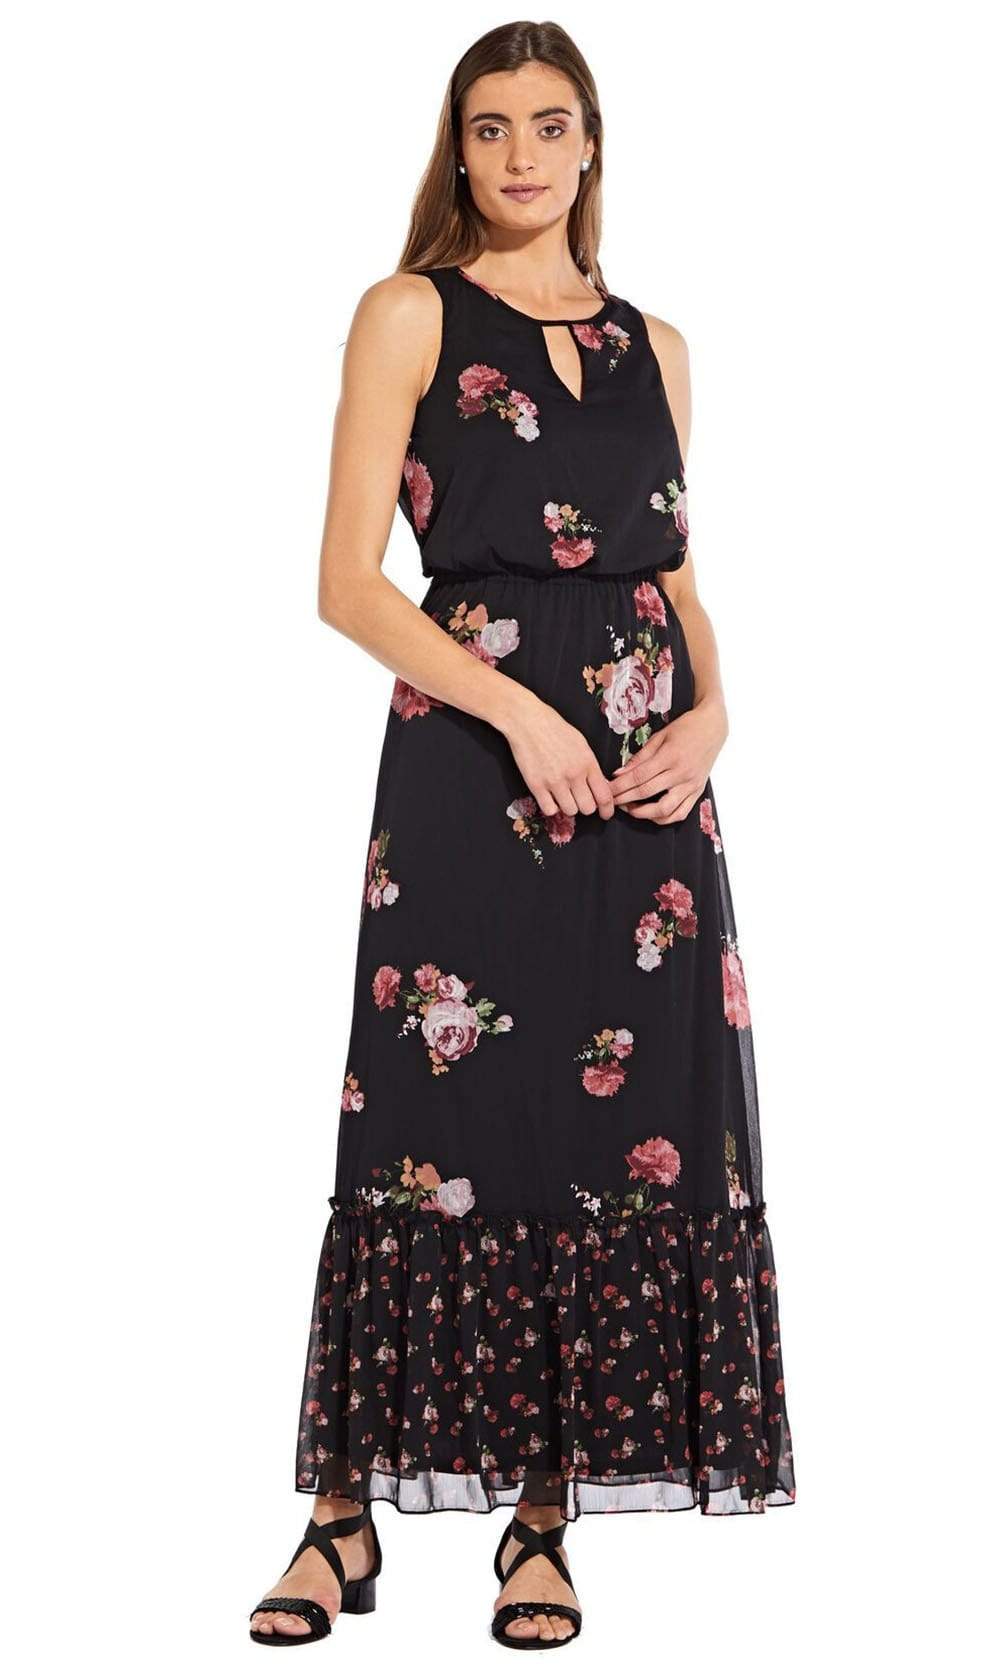 Adrianna Papell - AP1D102546 Sleeveless Floral Print Chiffon Dress Wedding Guest 0 / Black Multi